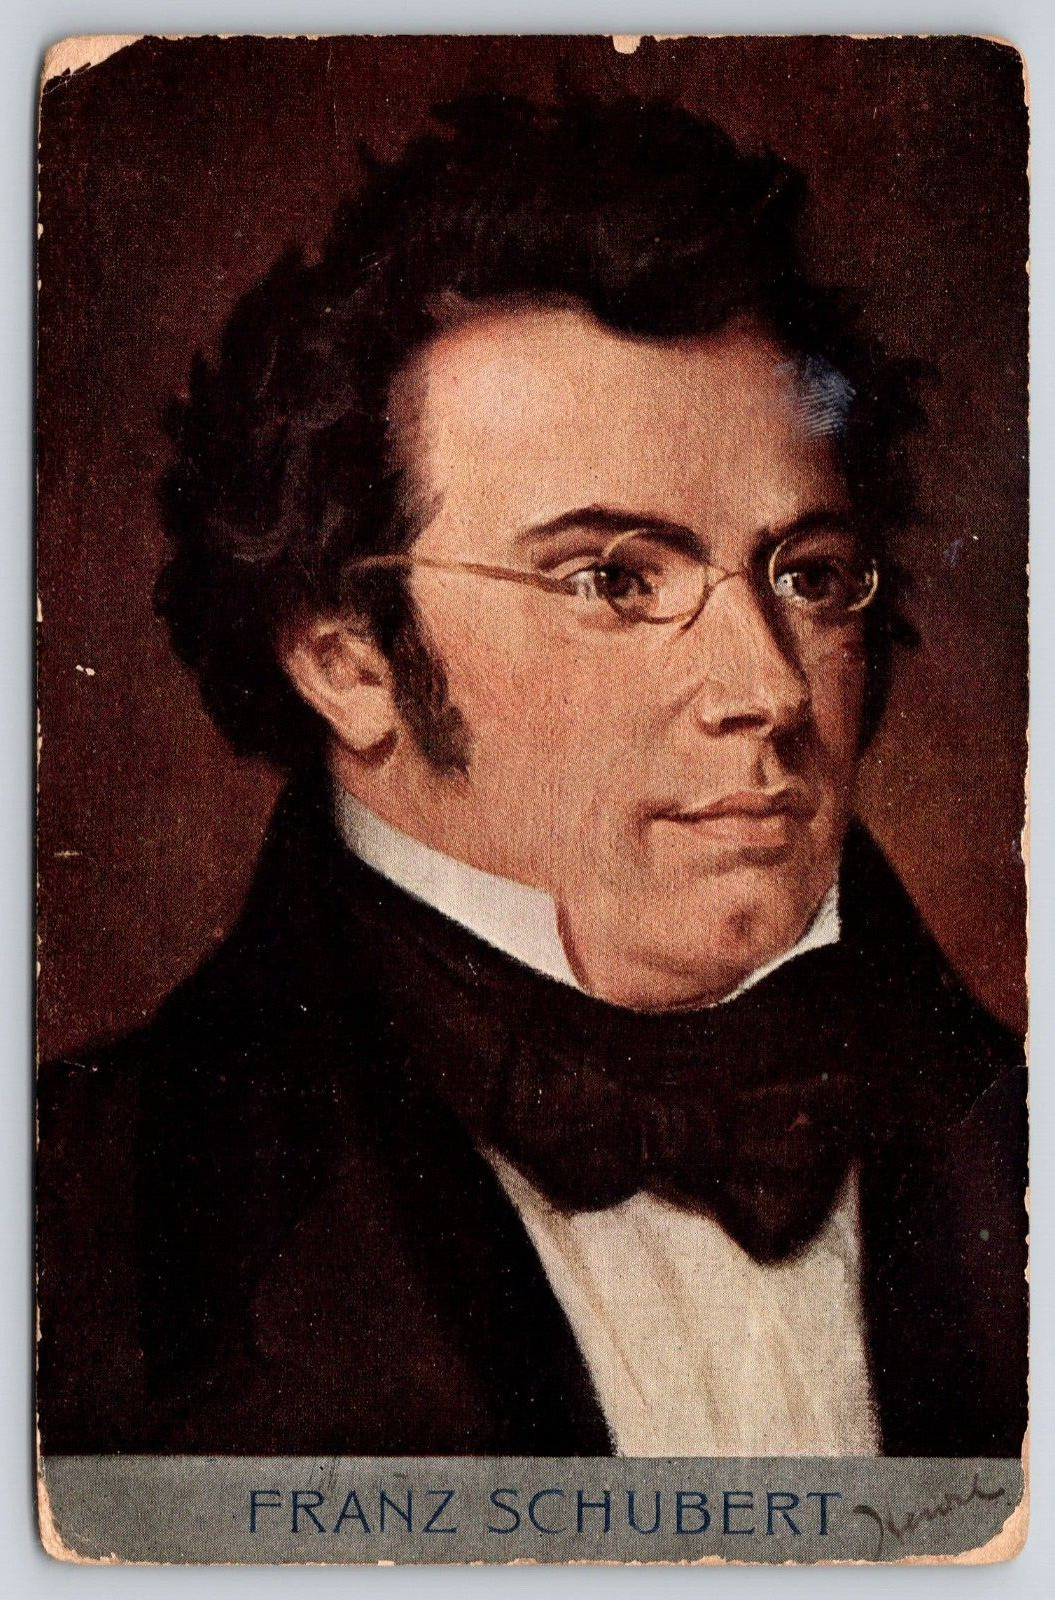 Author and Composer Franz Schubert 1908 Portrait Postcard